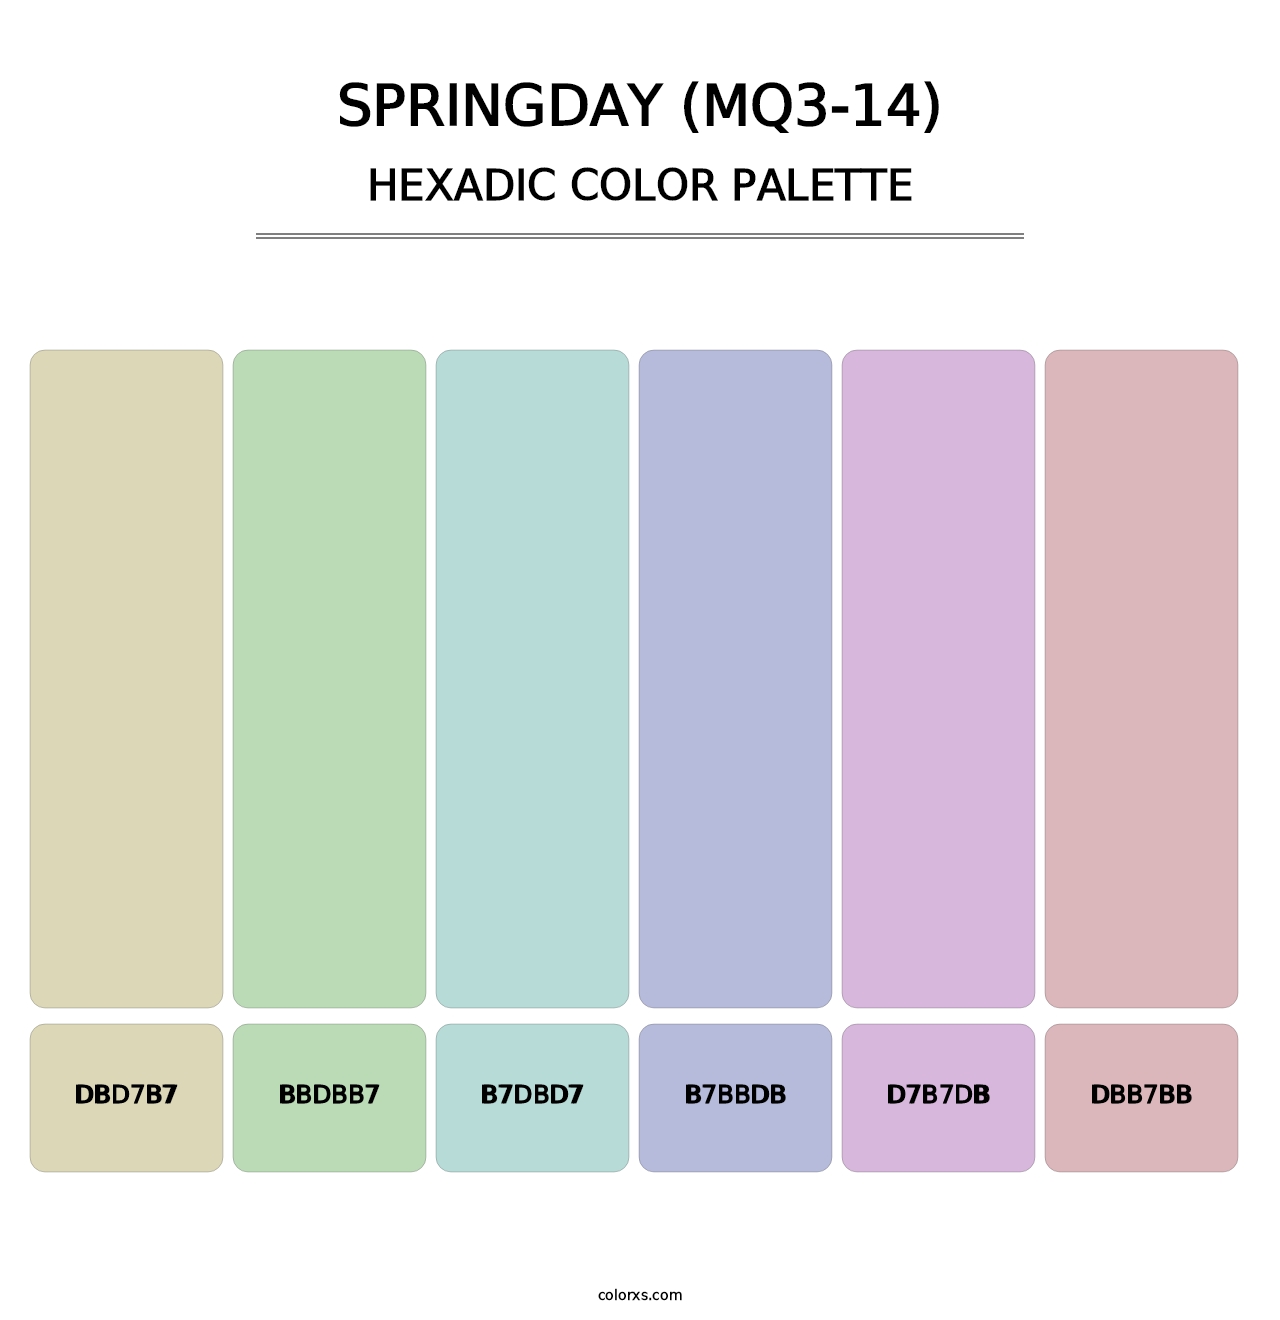 Springday (MQ3-14) - Hexadic Color Palette